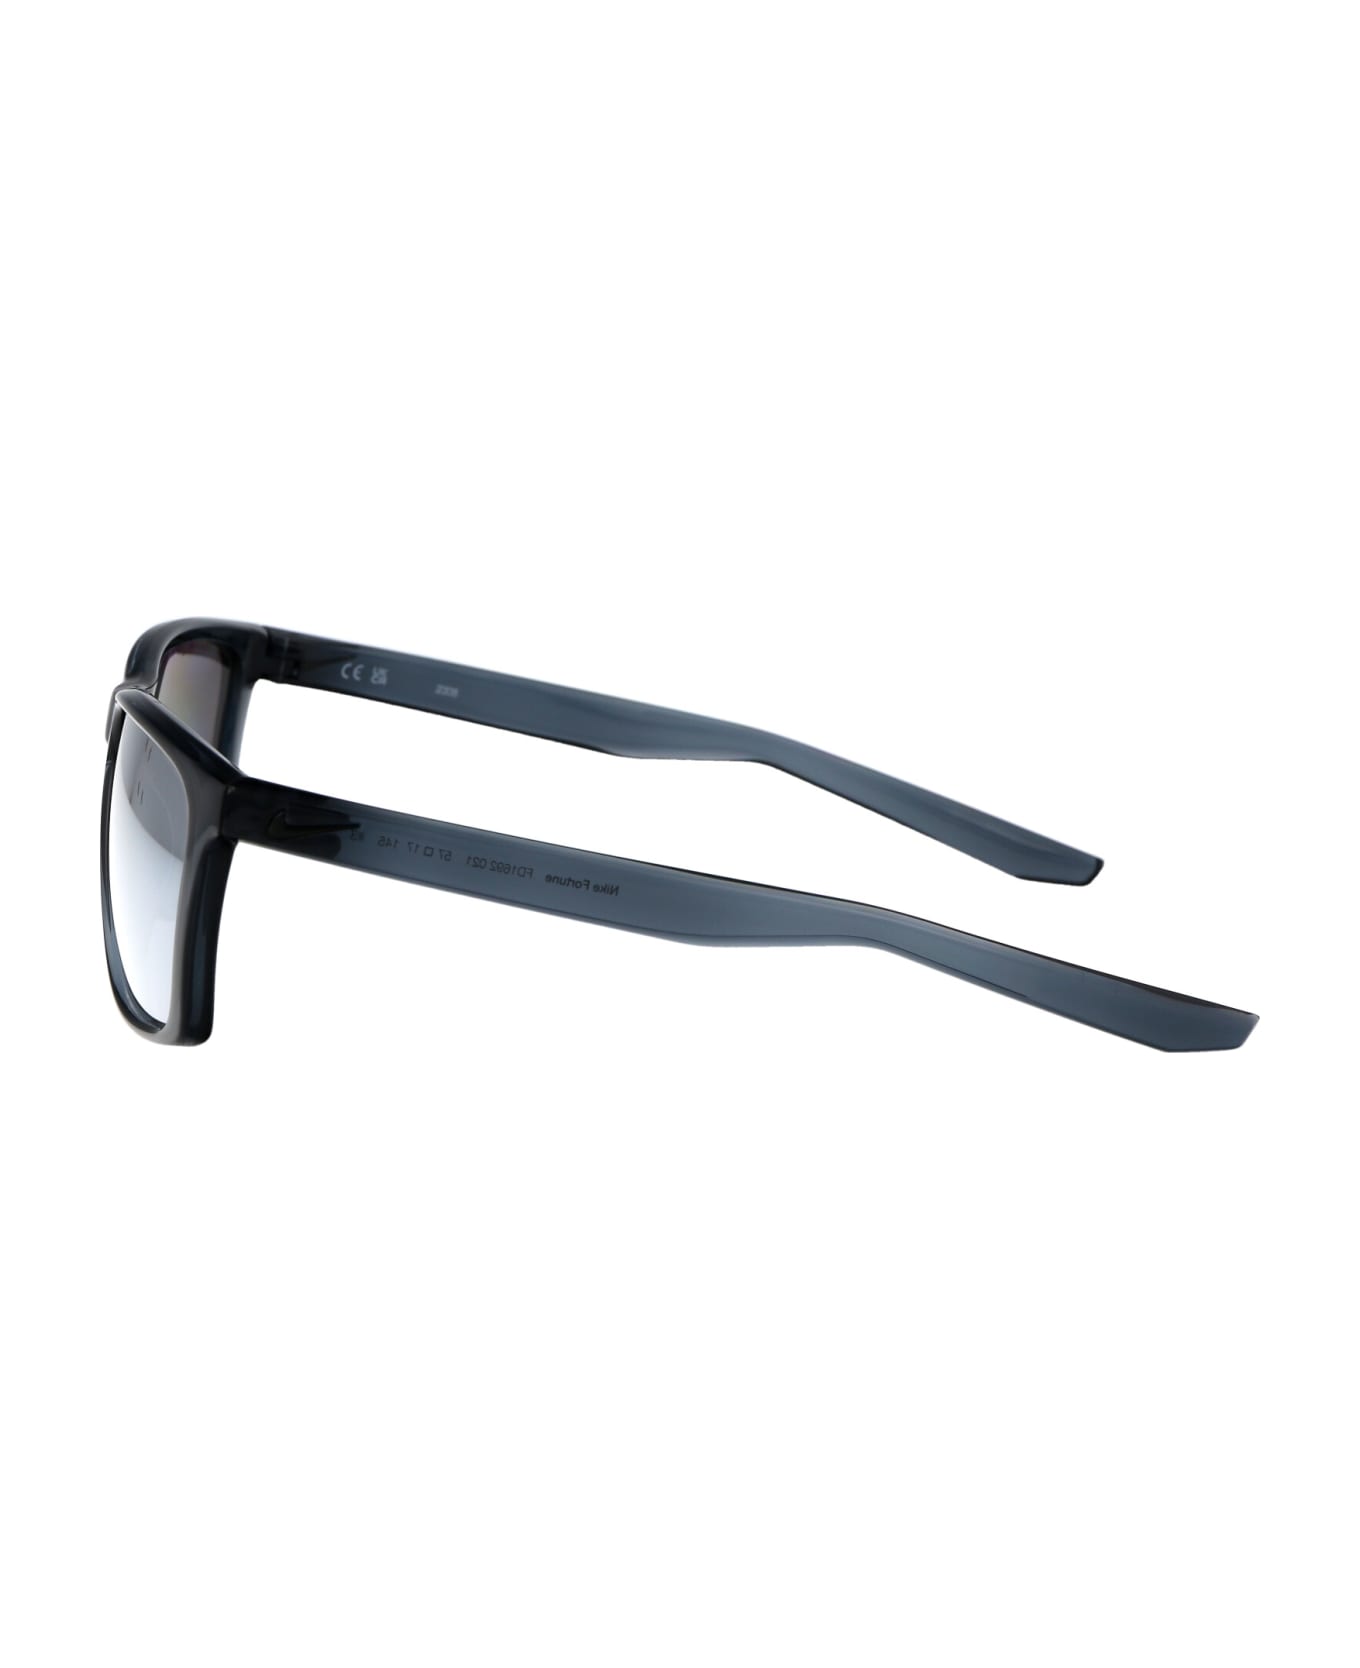 Nike Fortune Sunglasses - 021 DARK GREY GRIS FONCE サングラス